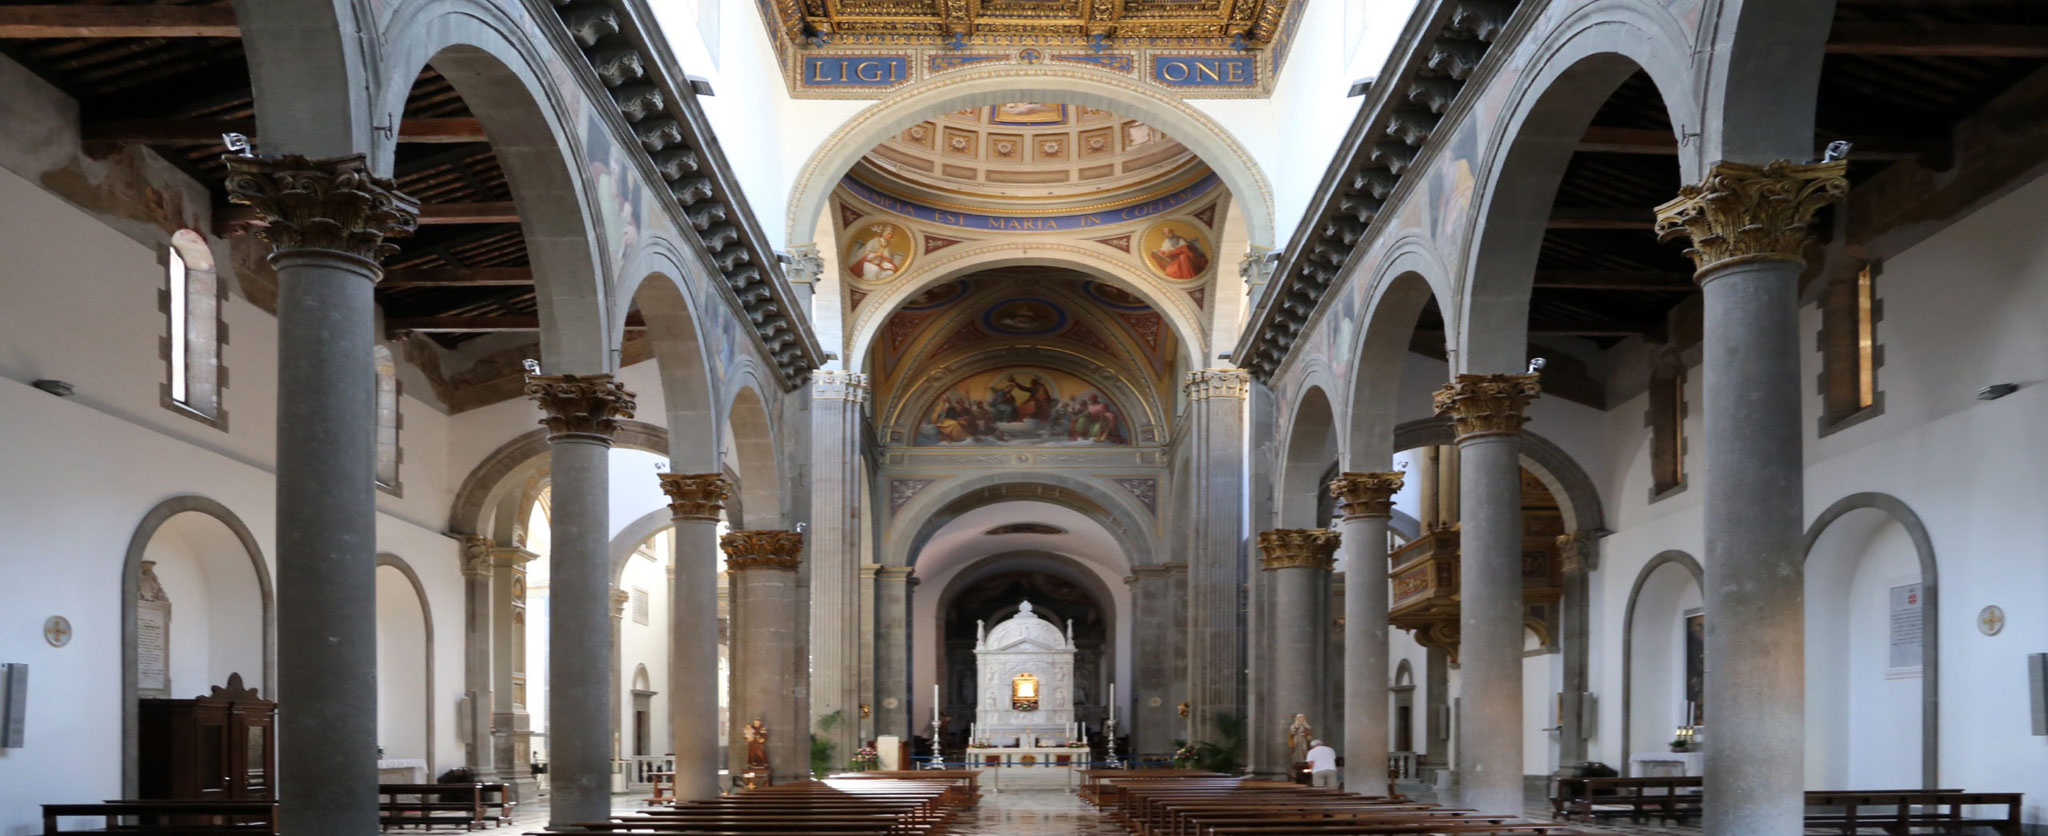 Church of Santa Maria della Quercia (inside) - 2 km - 5 minutes (by car, 25 on foot)